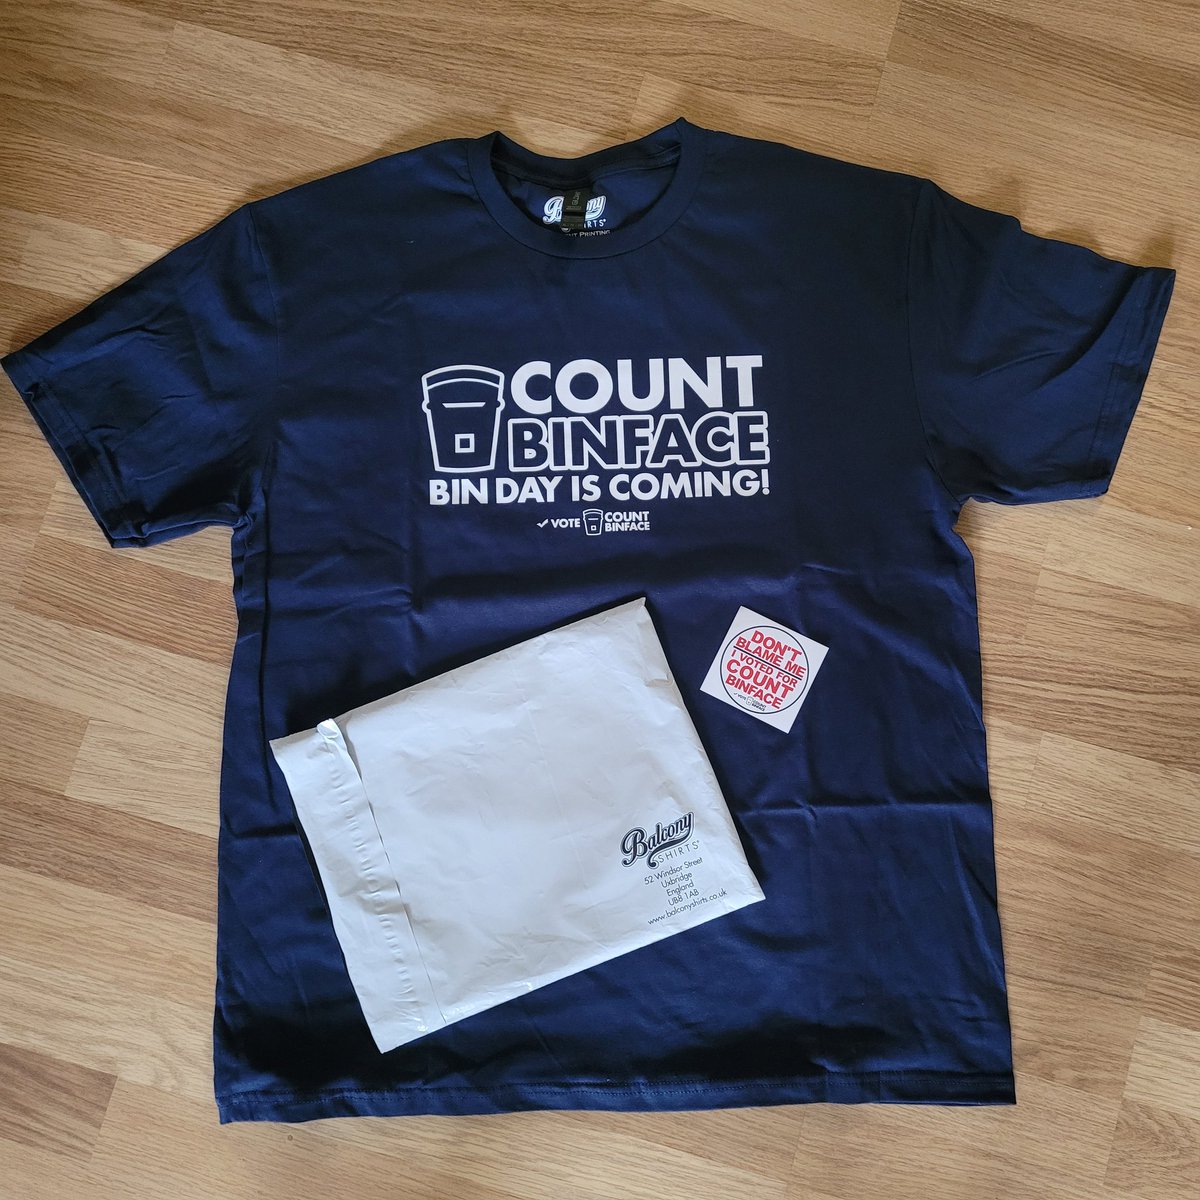 Got home to find my @CountBinface @balconyshirts #BinDayIsComing T-shirt had arrived, with a bonus sticker!!

#UxbridgeandSouthRuislipbyelection #UxbridgeAndSouthRuislip #countbinface